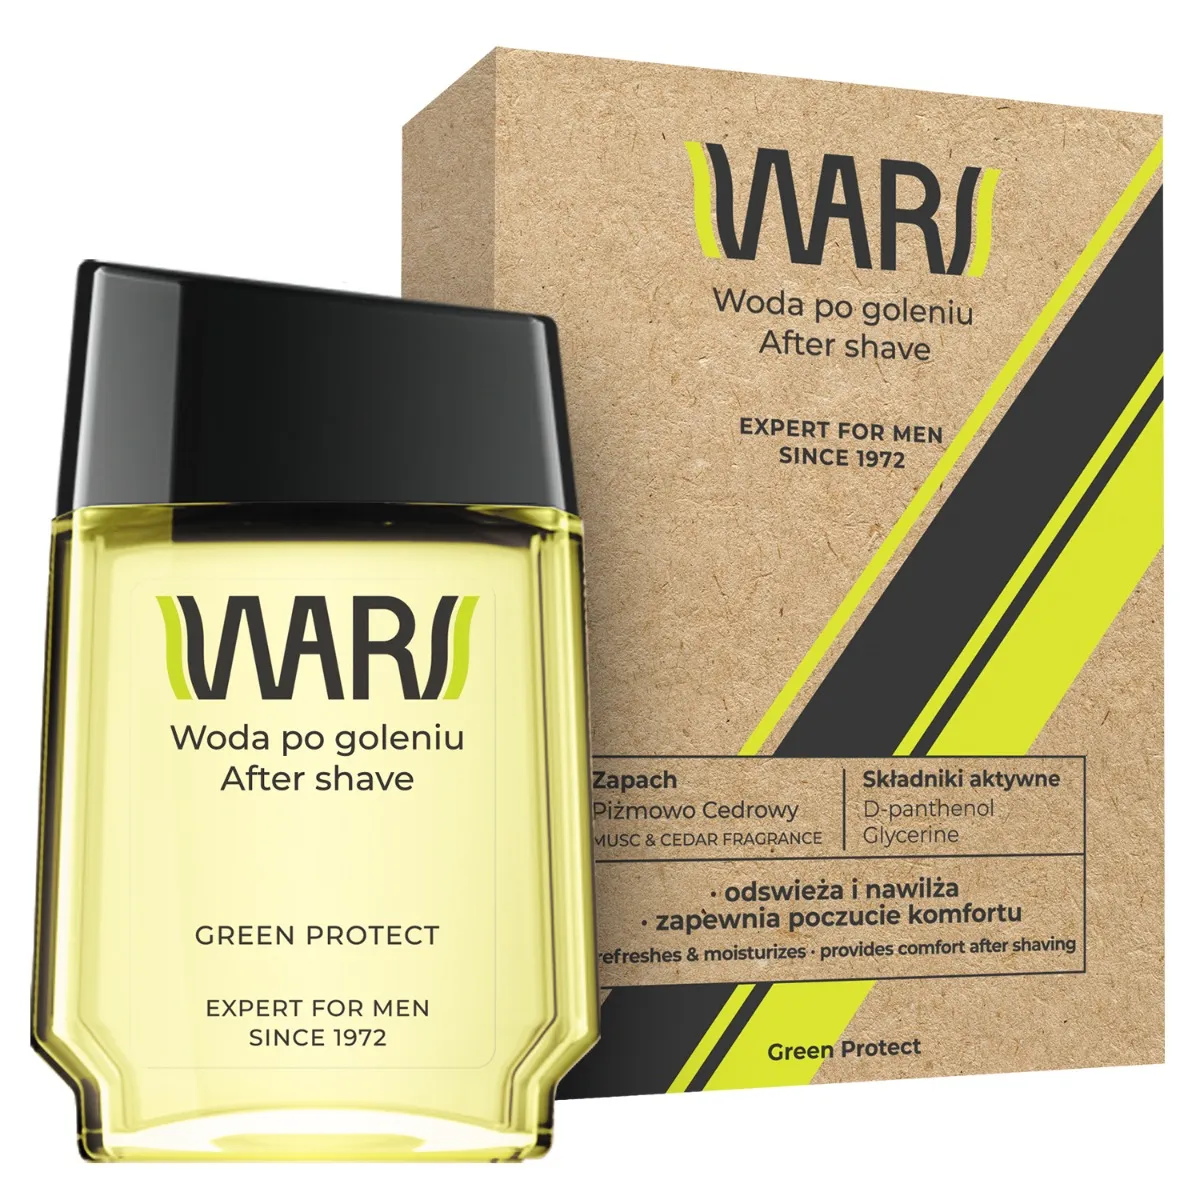 Wars Expert for Men Green Protect Woda po goleniu, 90 ml